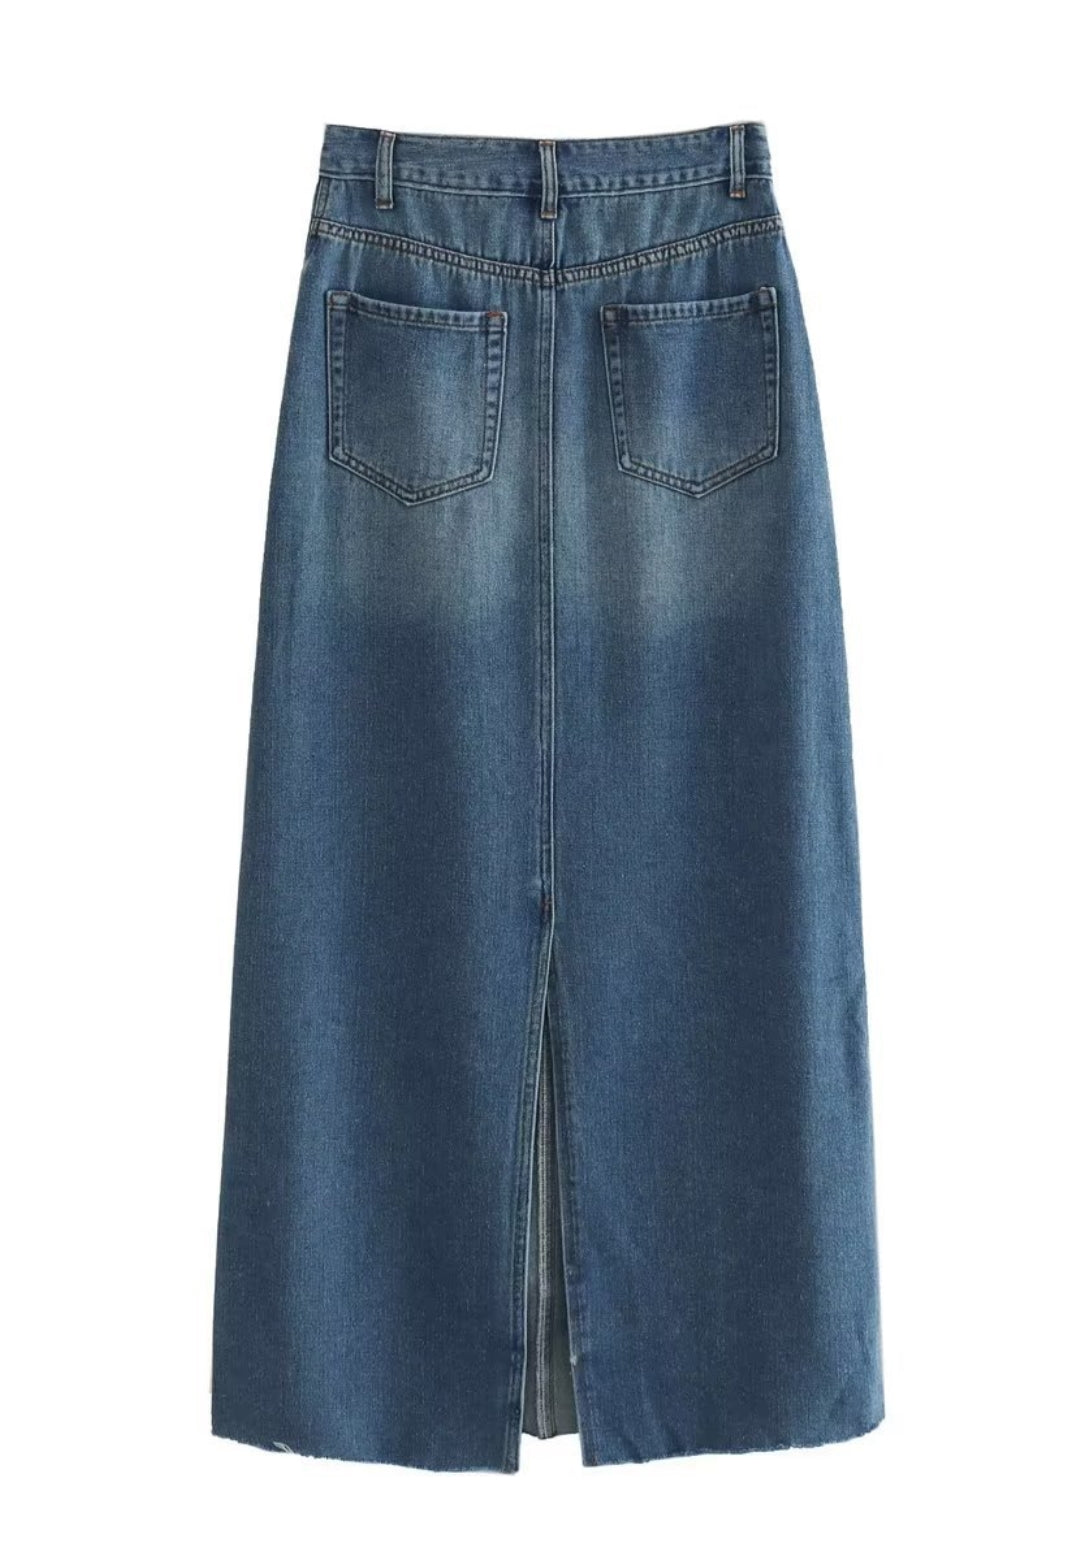 Faded Classic Denim Skirt